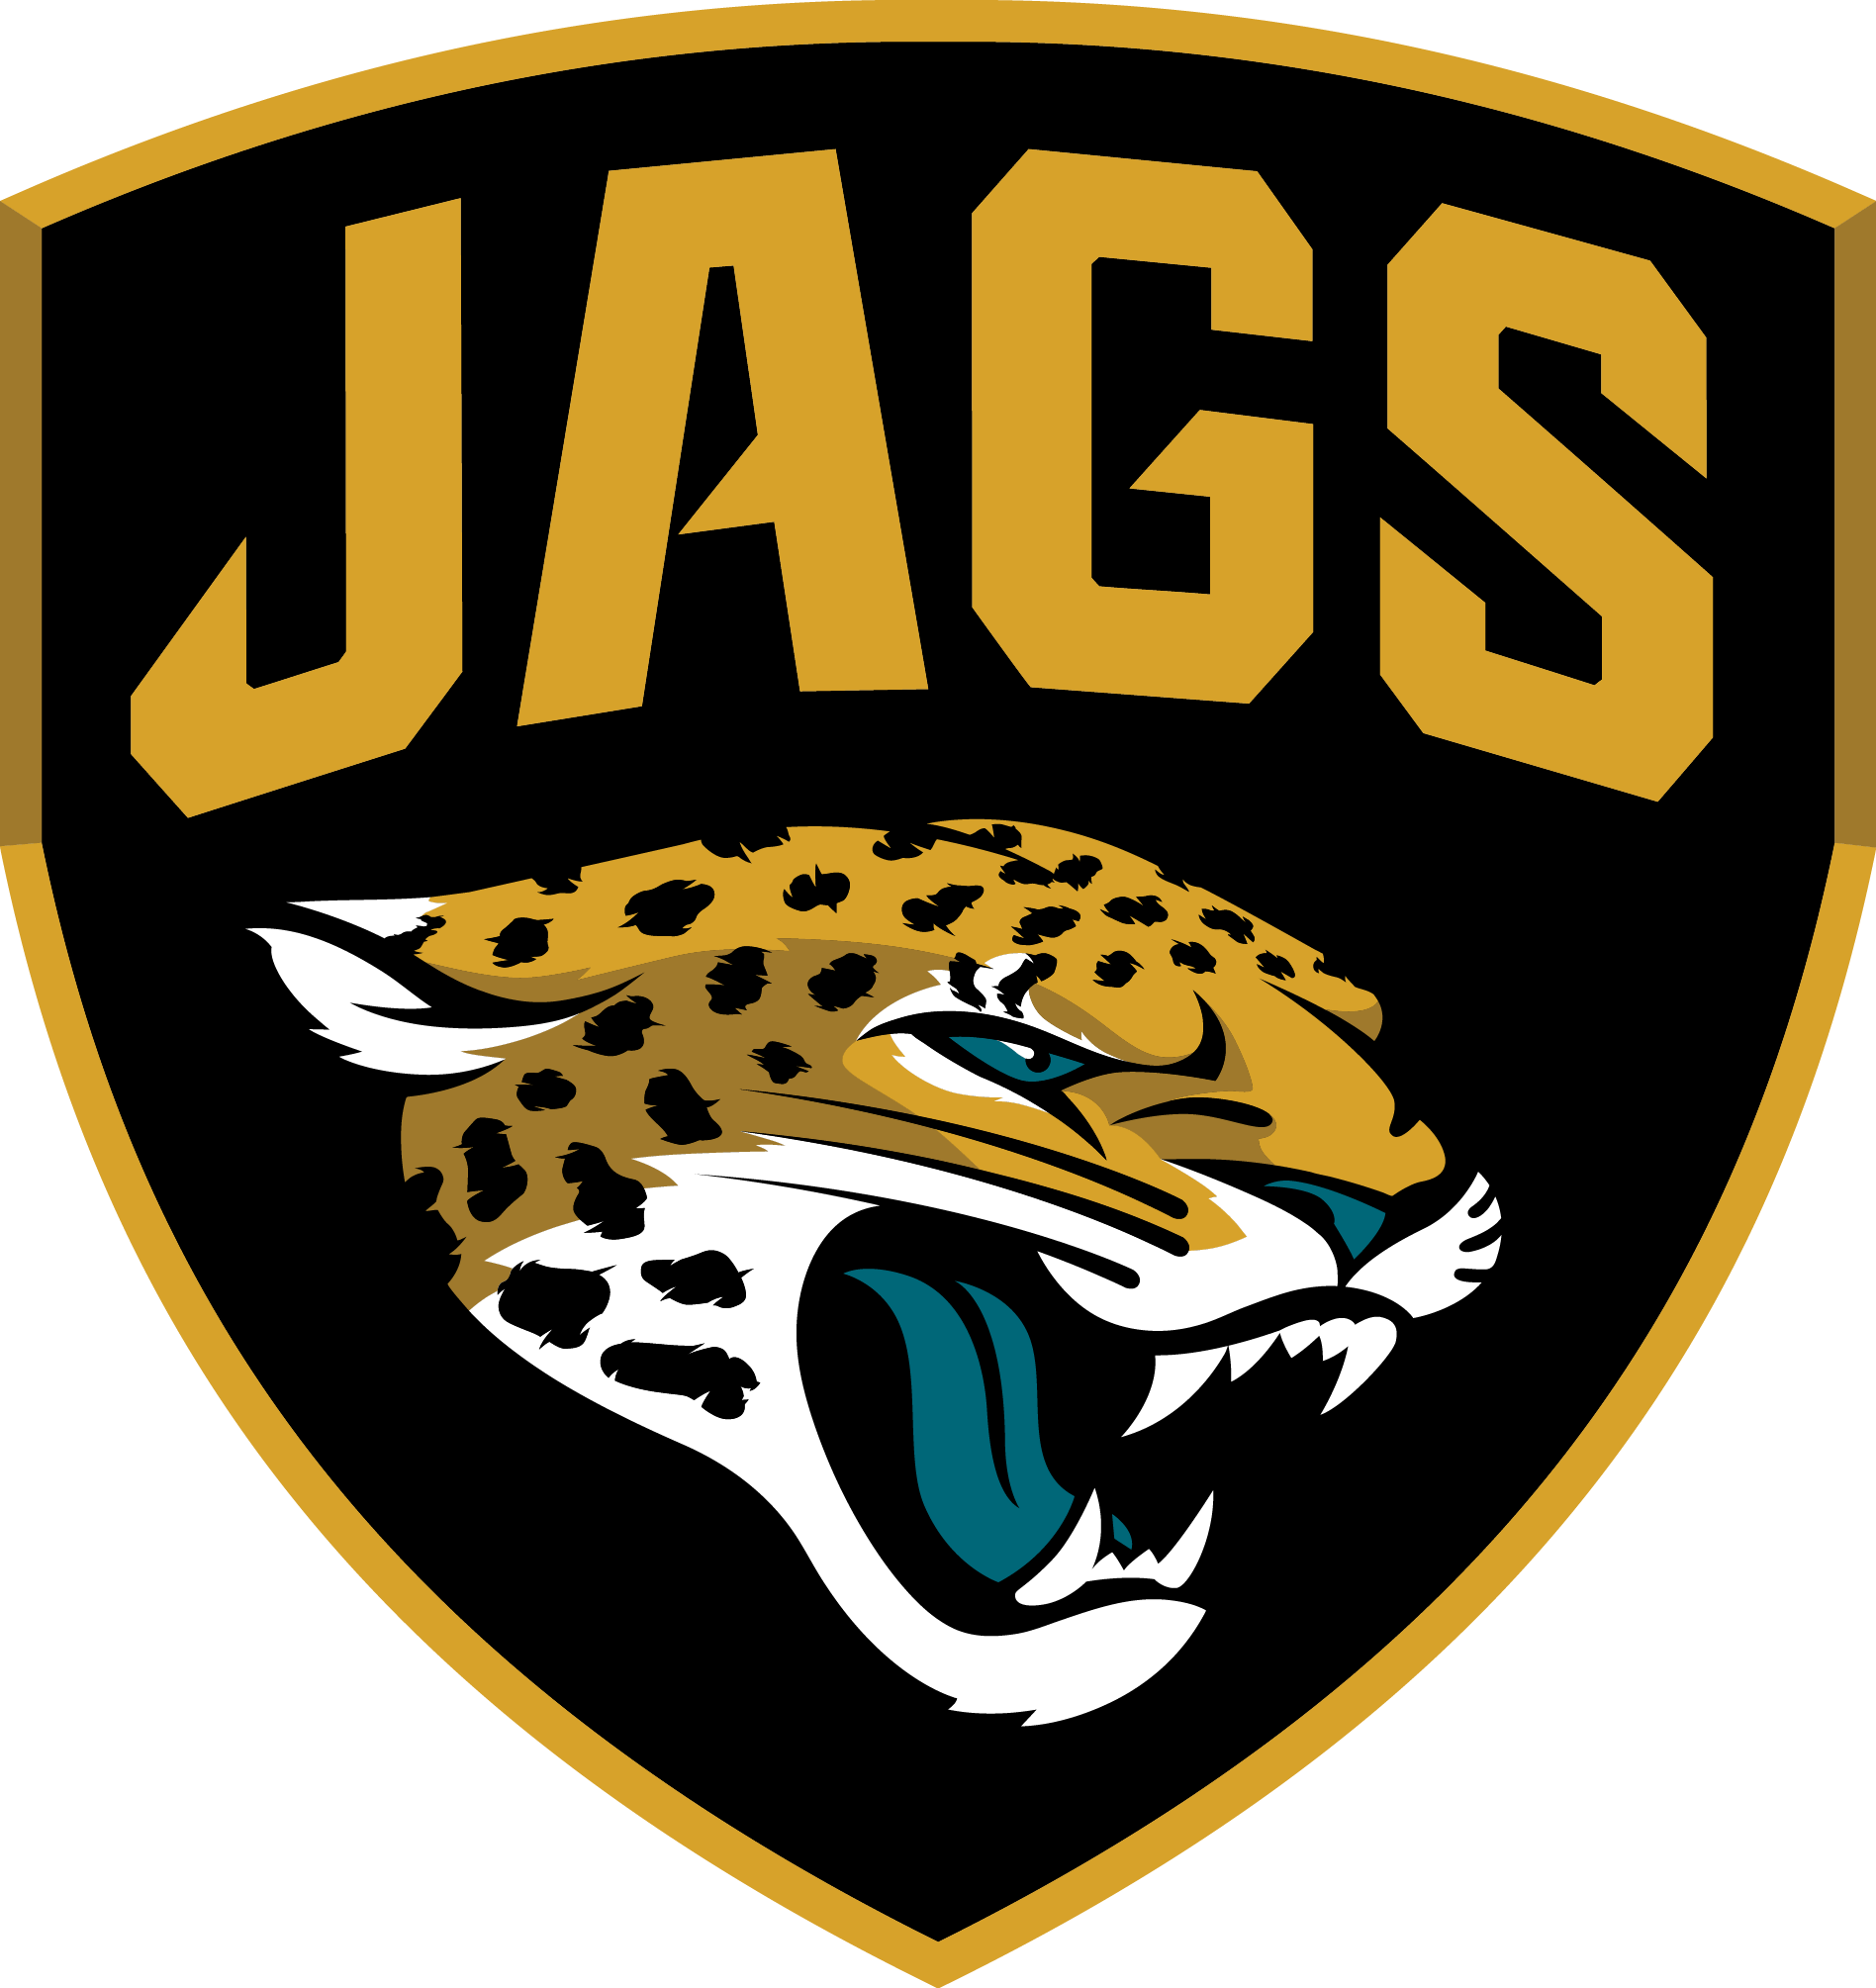 Jaguar Football Logo - Jacksonville Jaguars Alternate Logo - National Football League (NFL ...